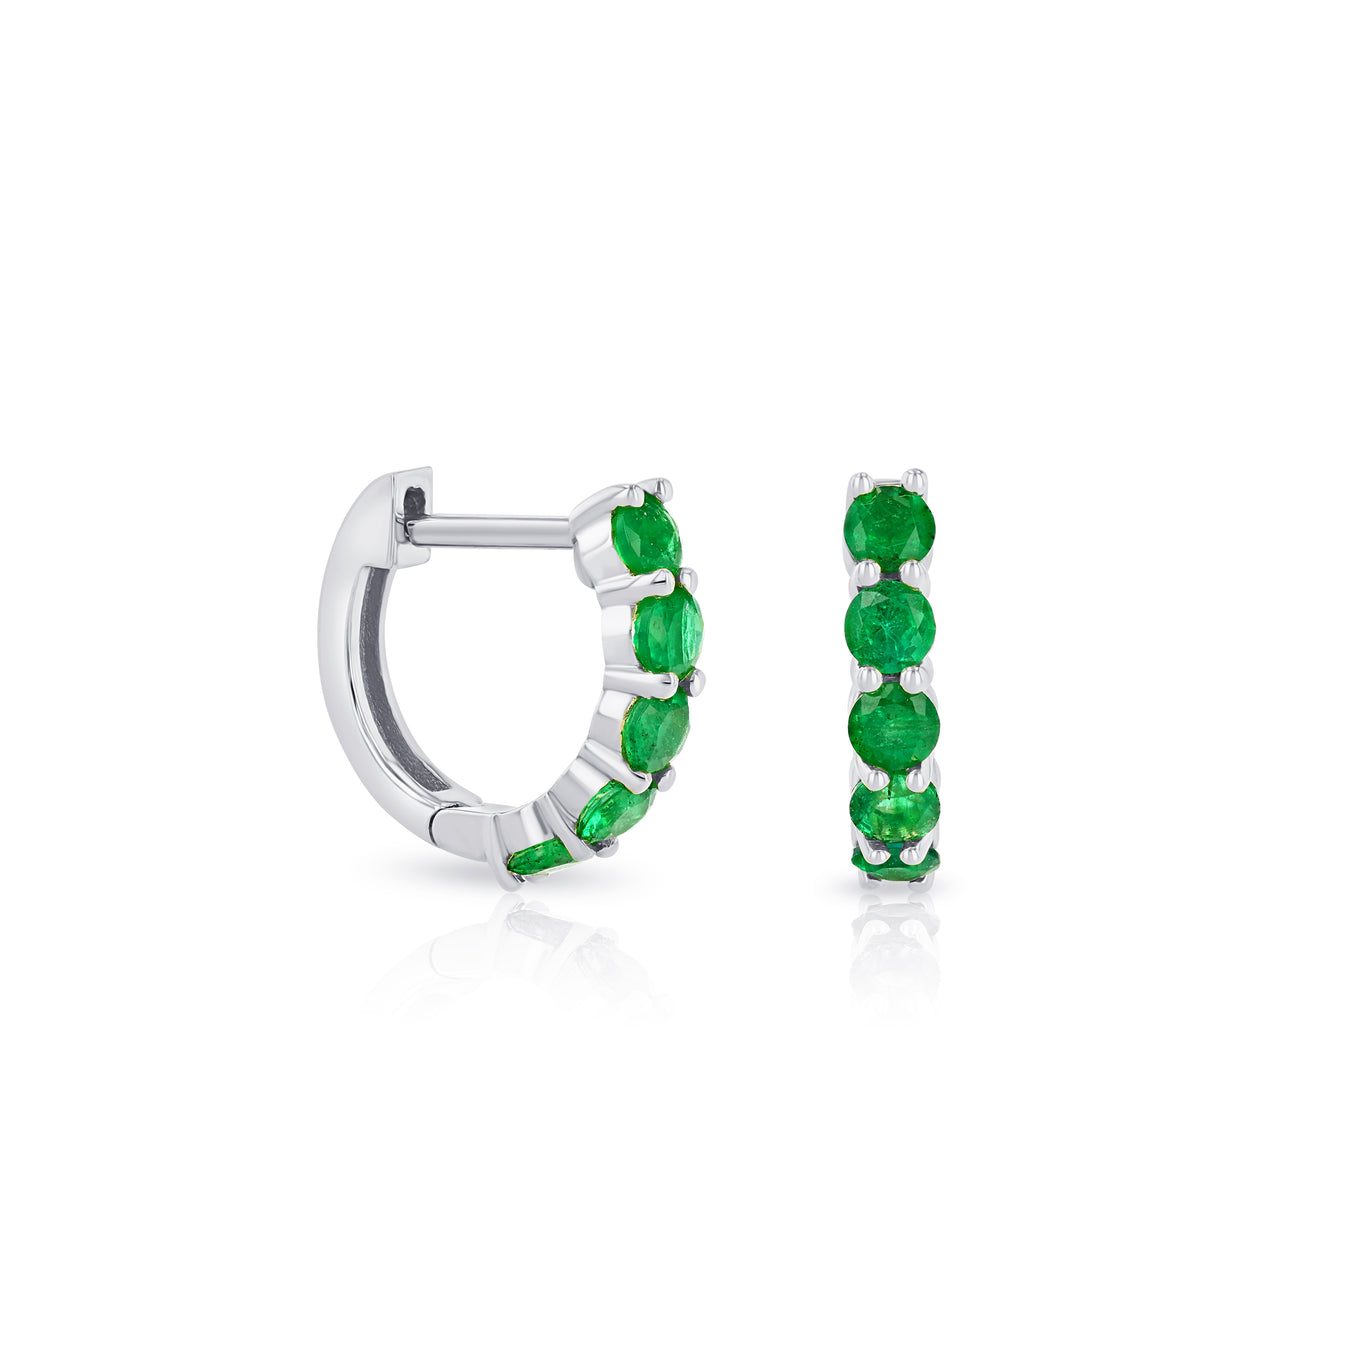 Emerald green Bridal crystal earrings, Crystal bridal stud earrings,  rhinestone studs in emerald green